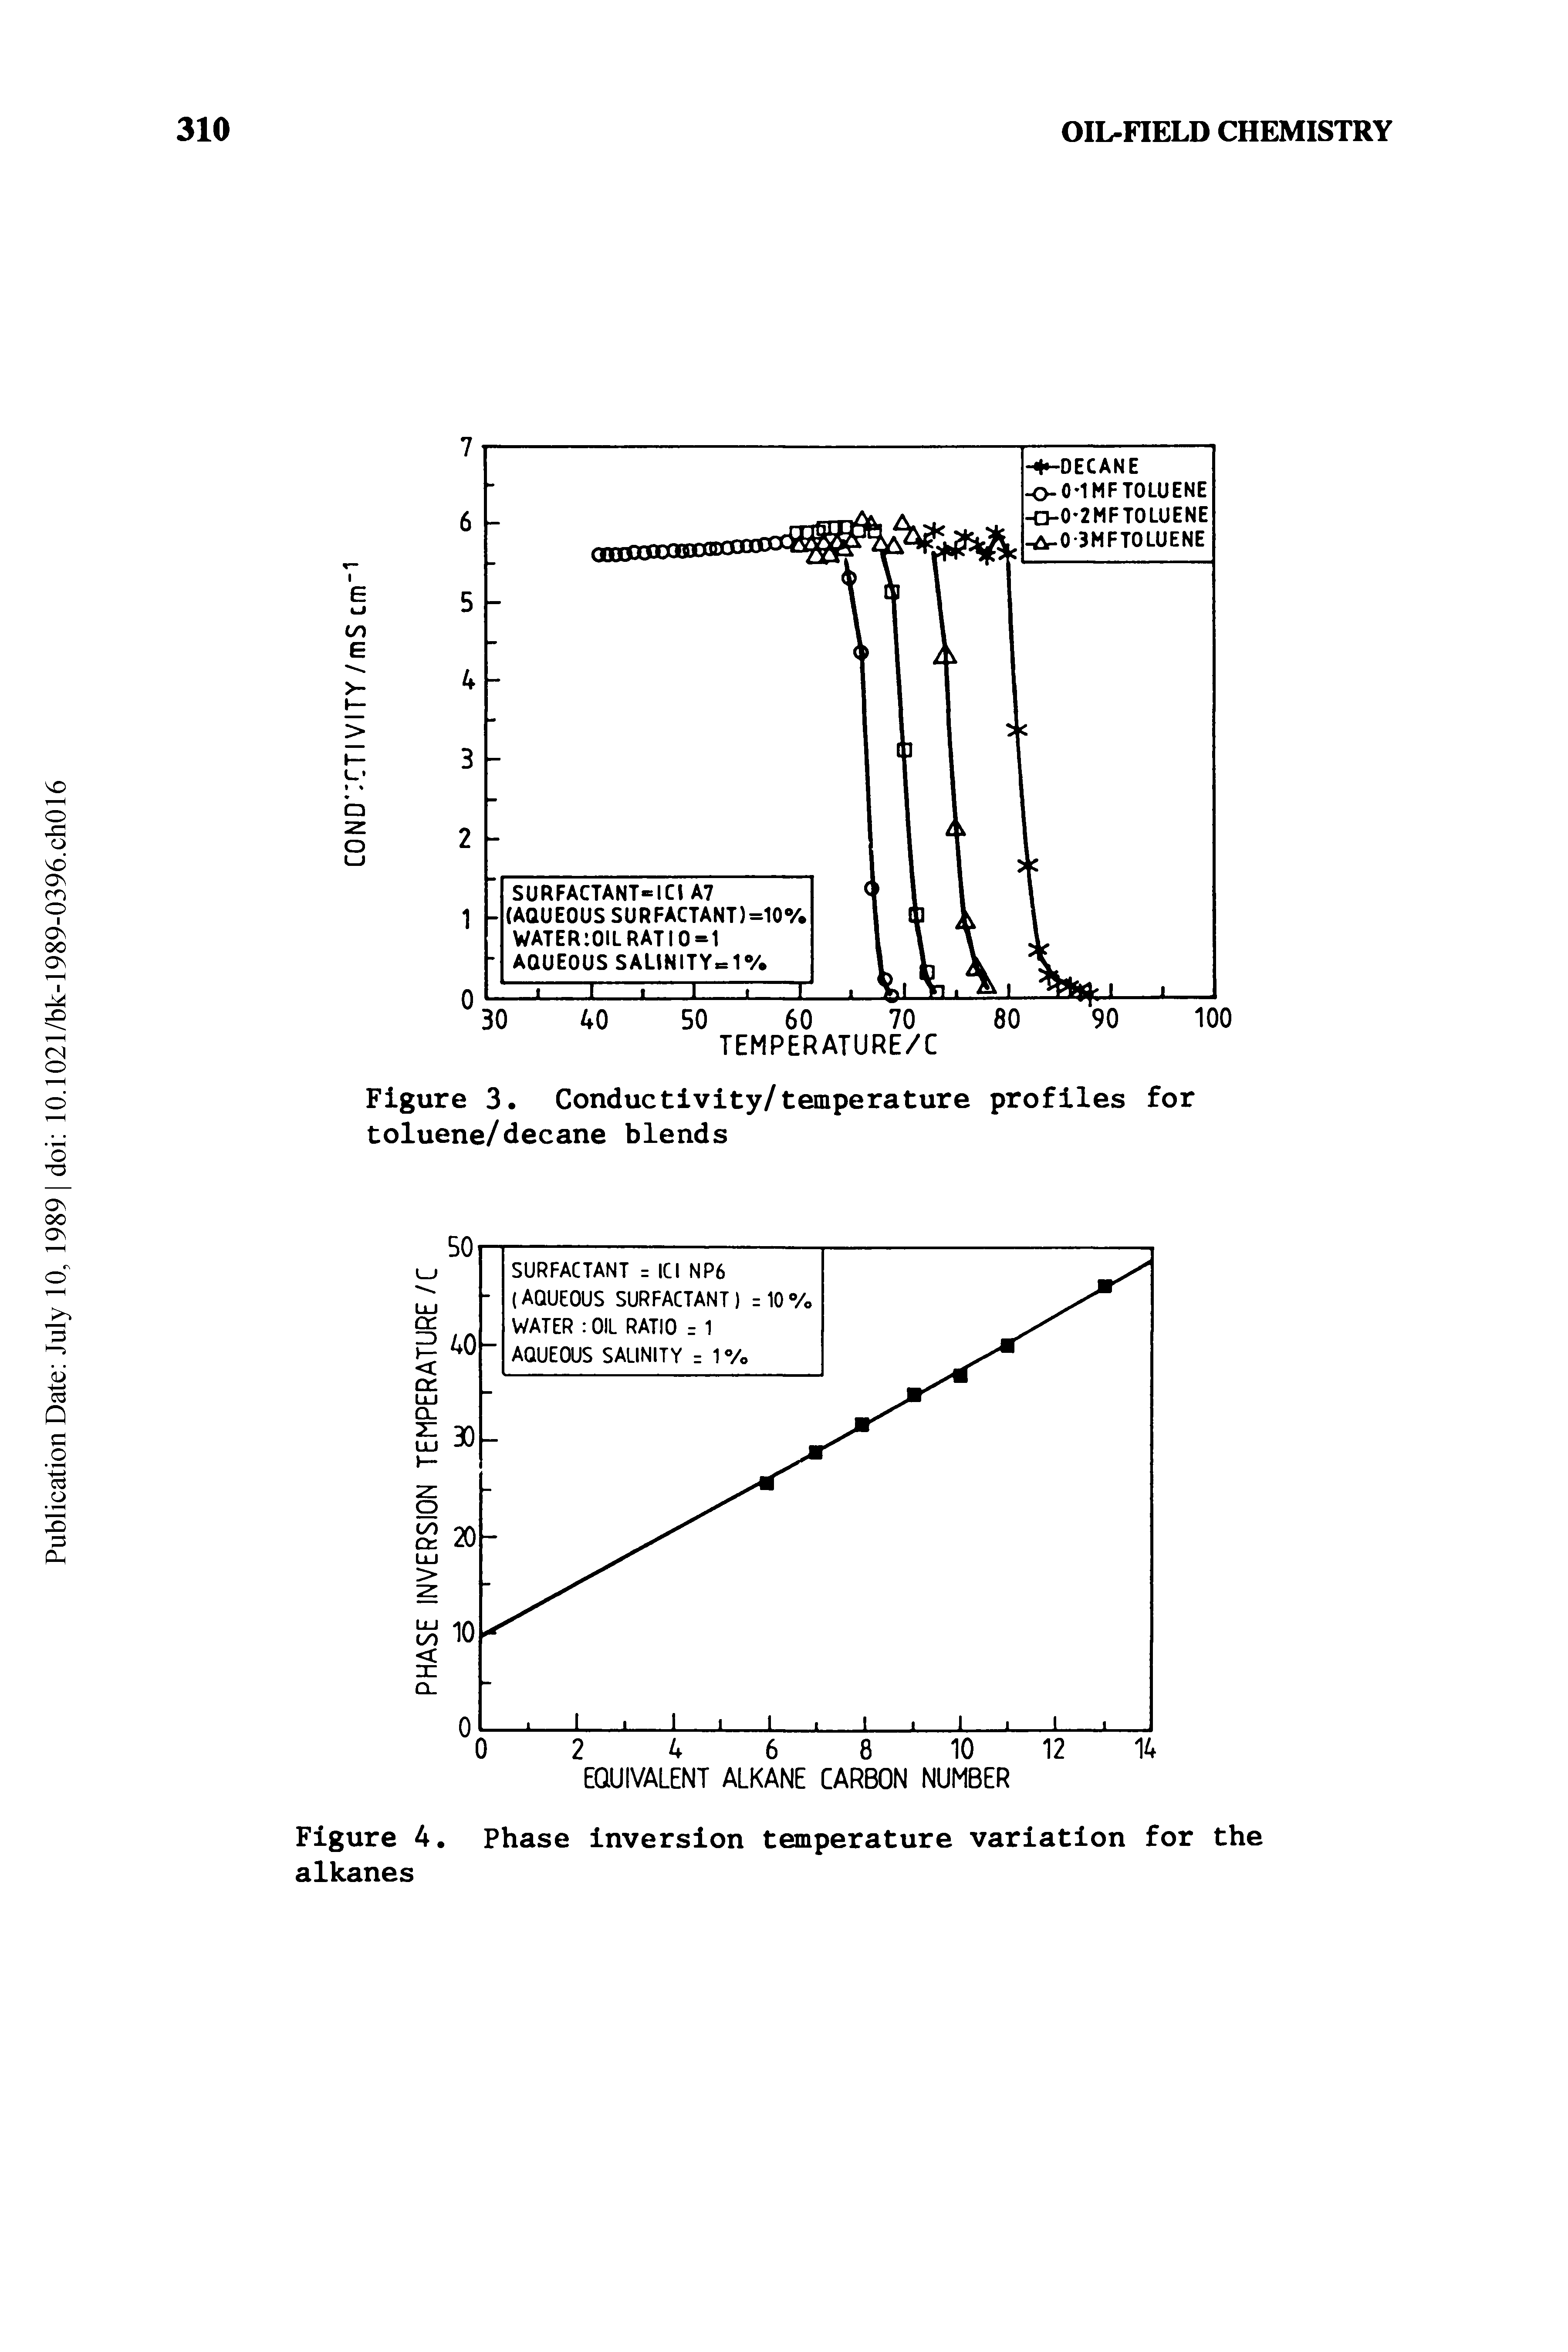 Figure 3. Conductivity/temperature profiles for toluene/decane blends...